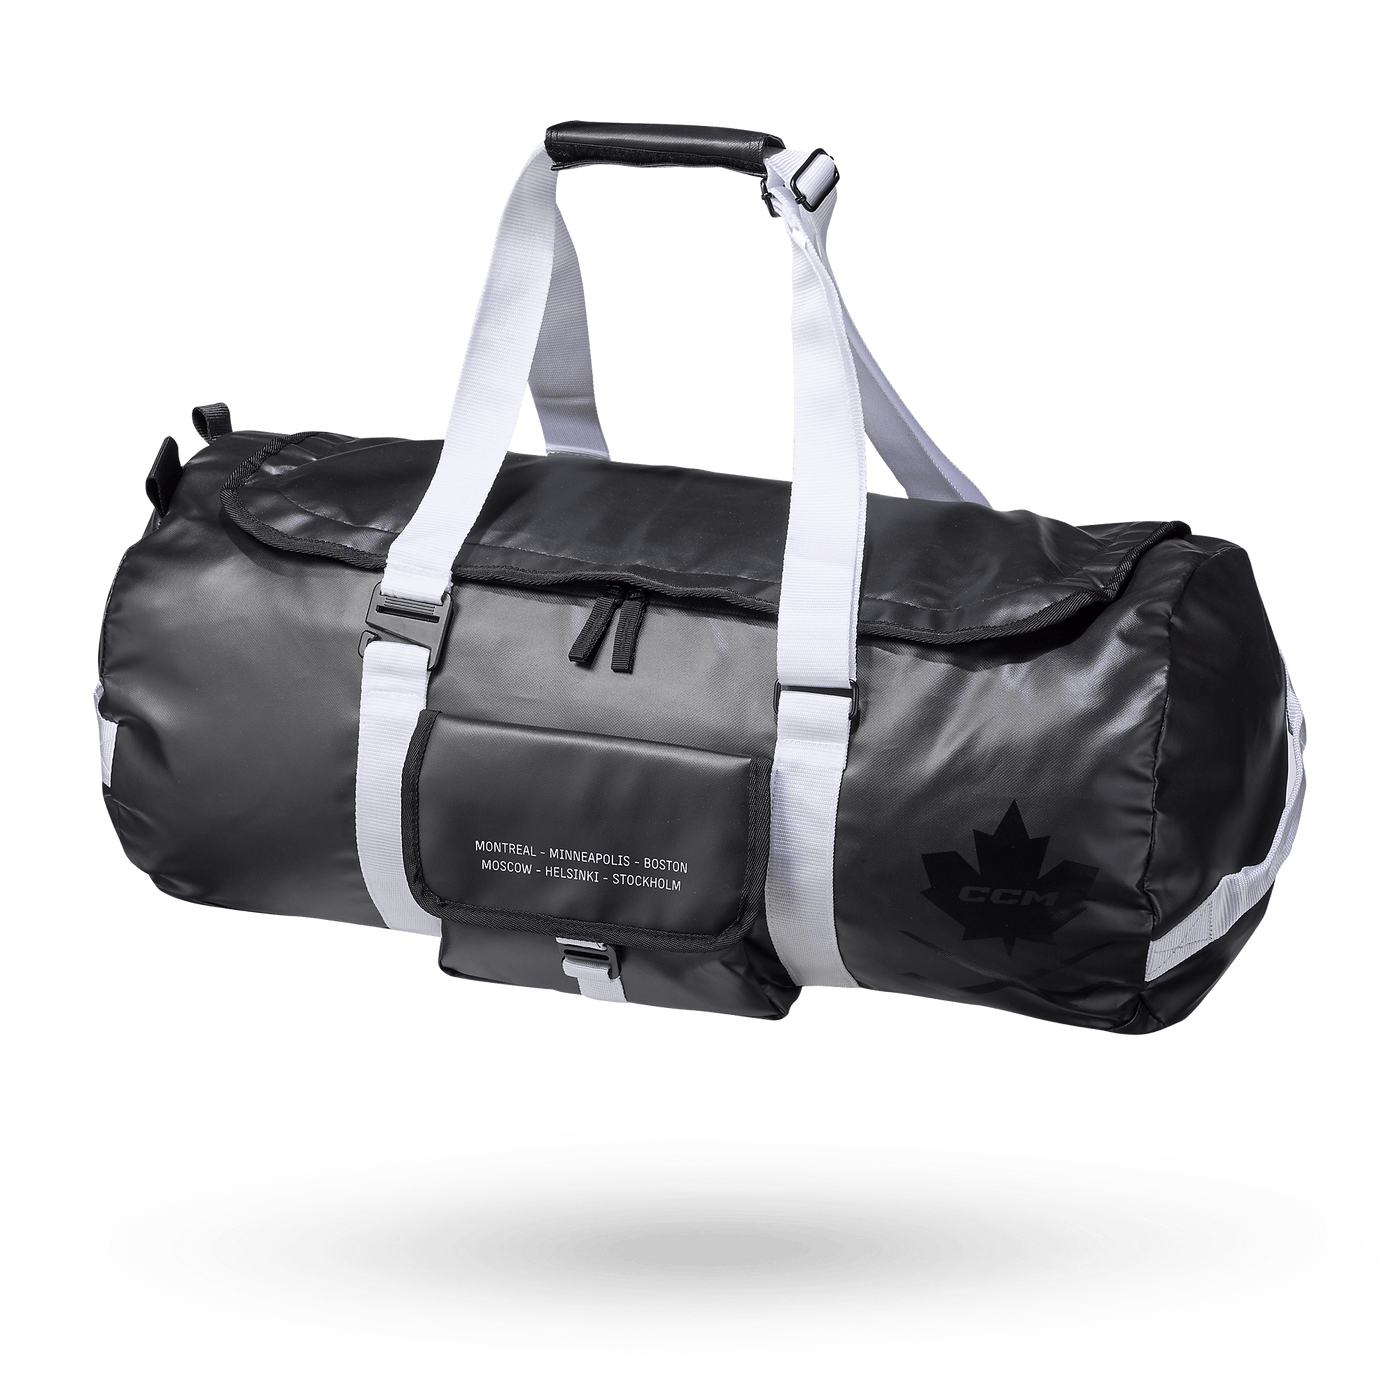 CCM Monochrome Duffle Bag - The Hockey Shop Source For Sports